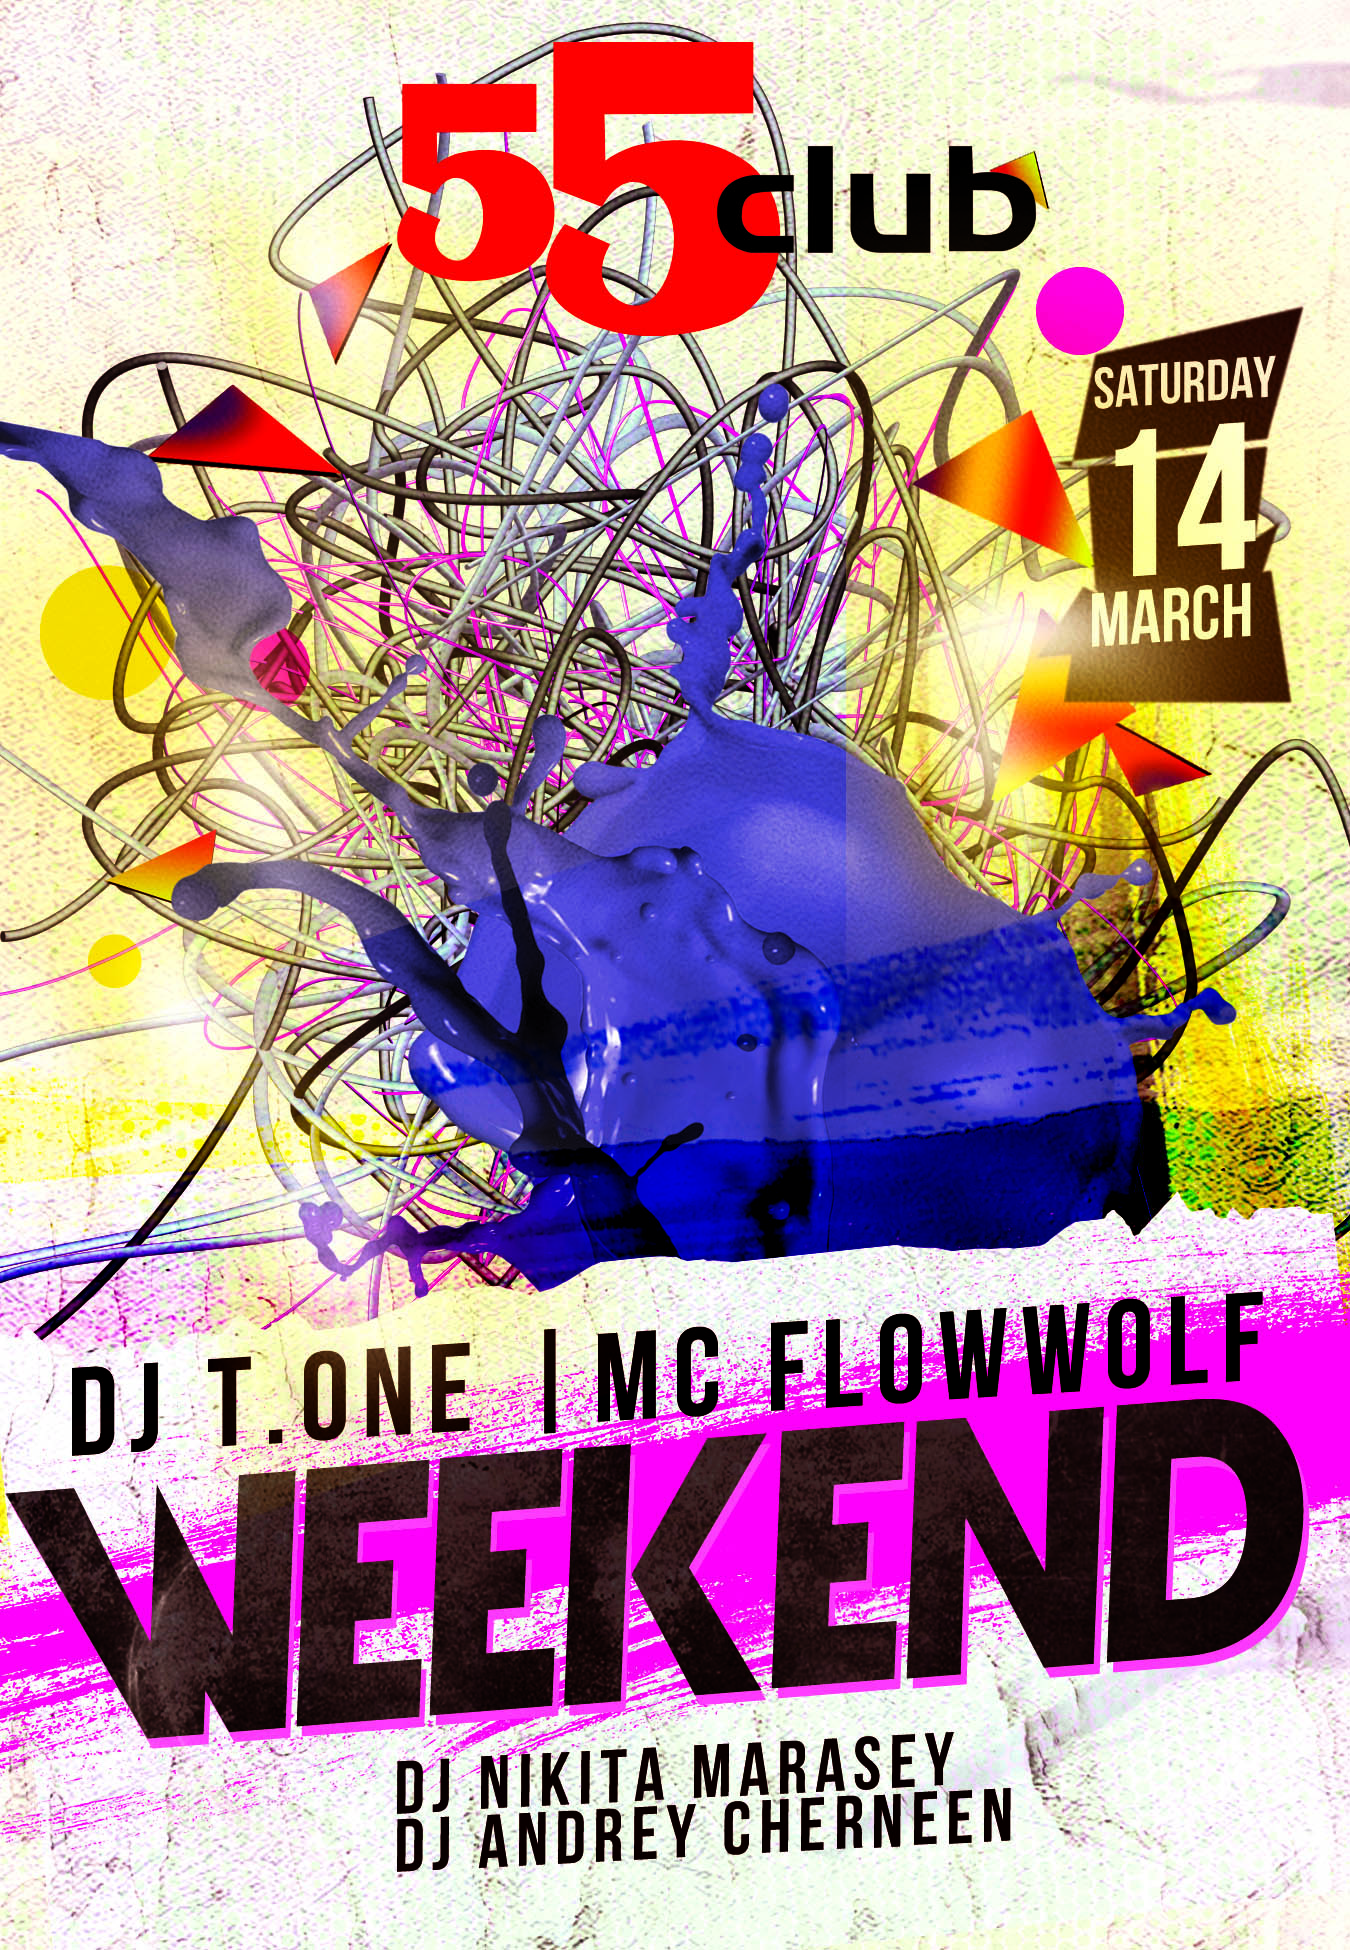  DJ T.ONE Weekend  55club, 14 